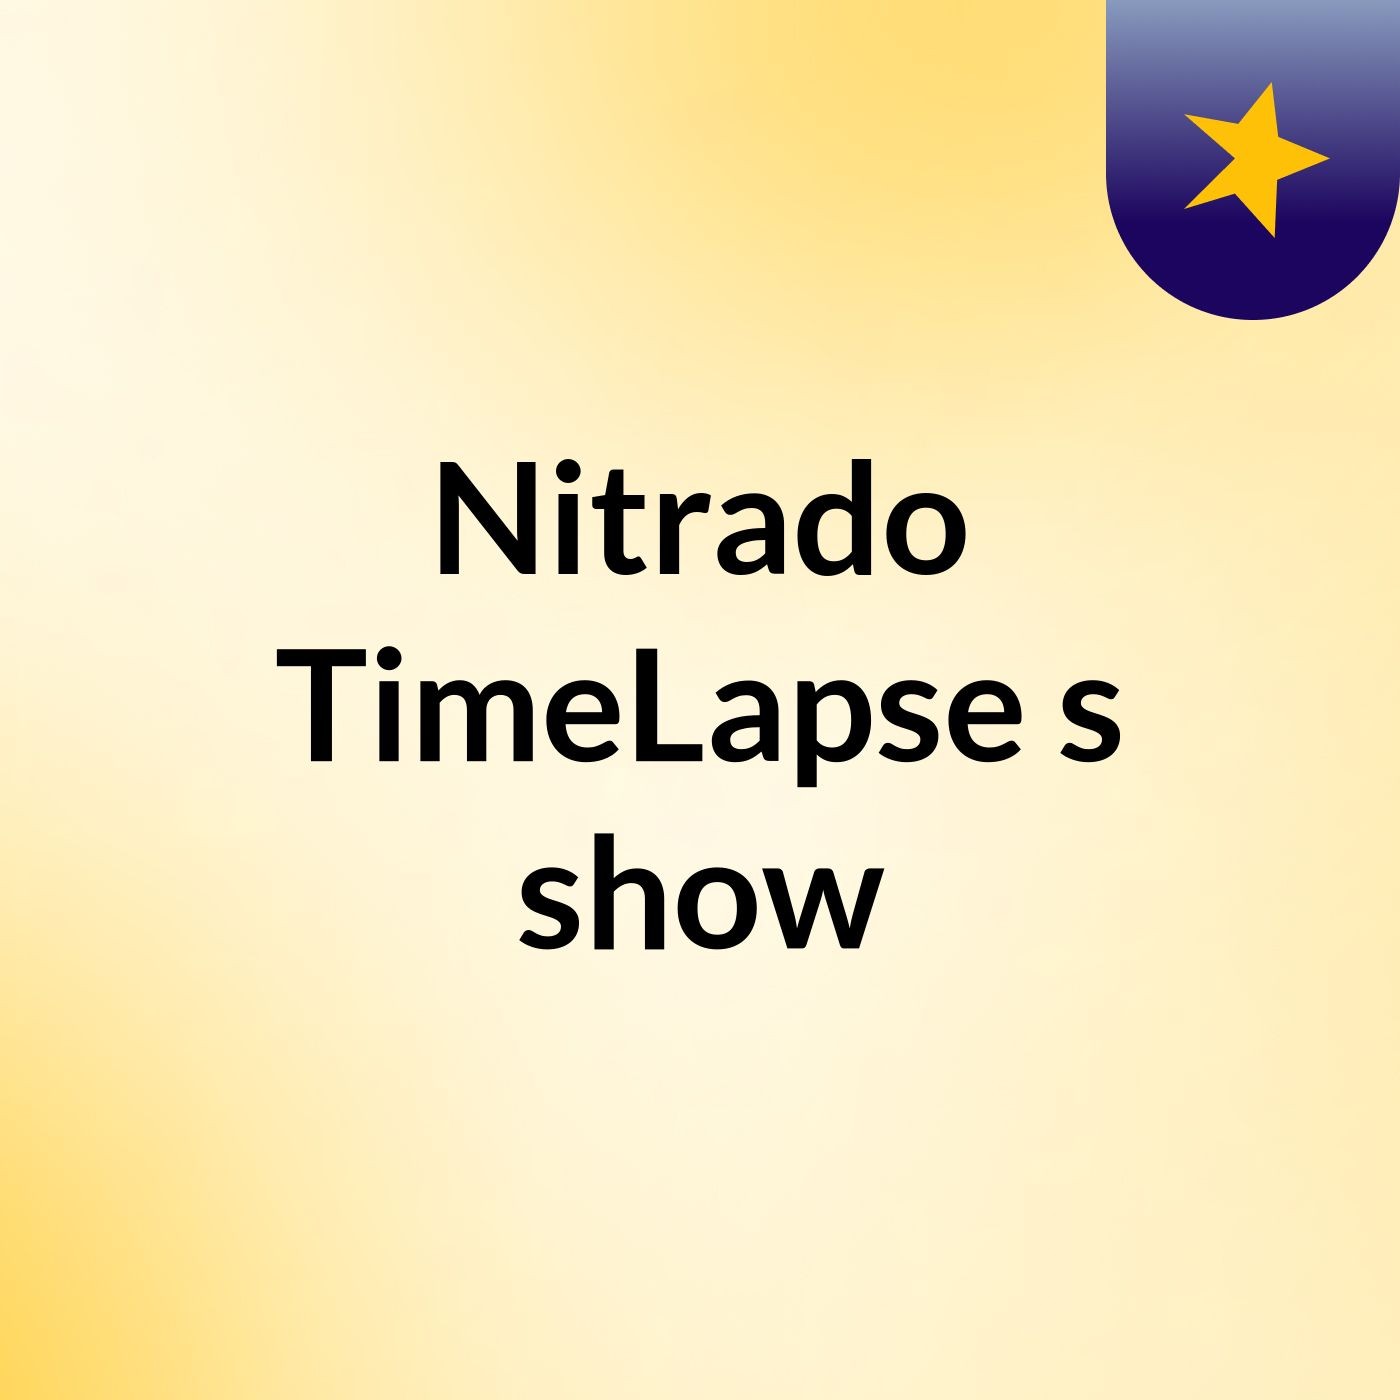 Nitrado TimeLapse's show